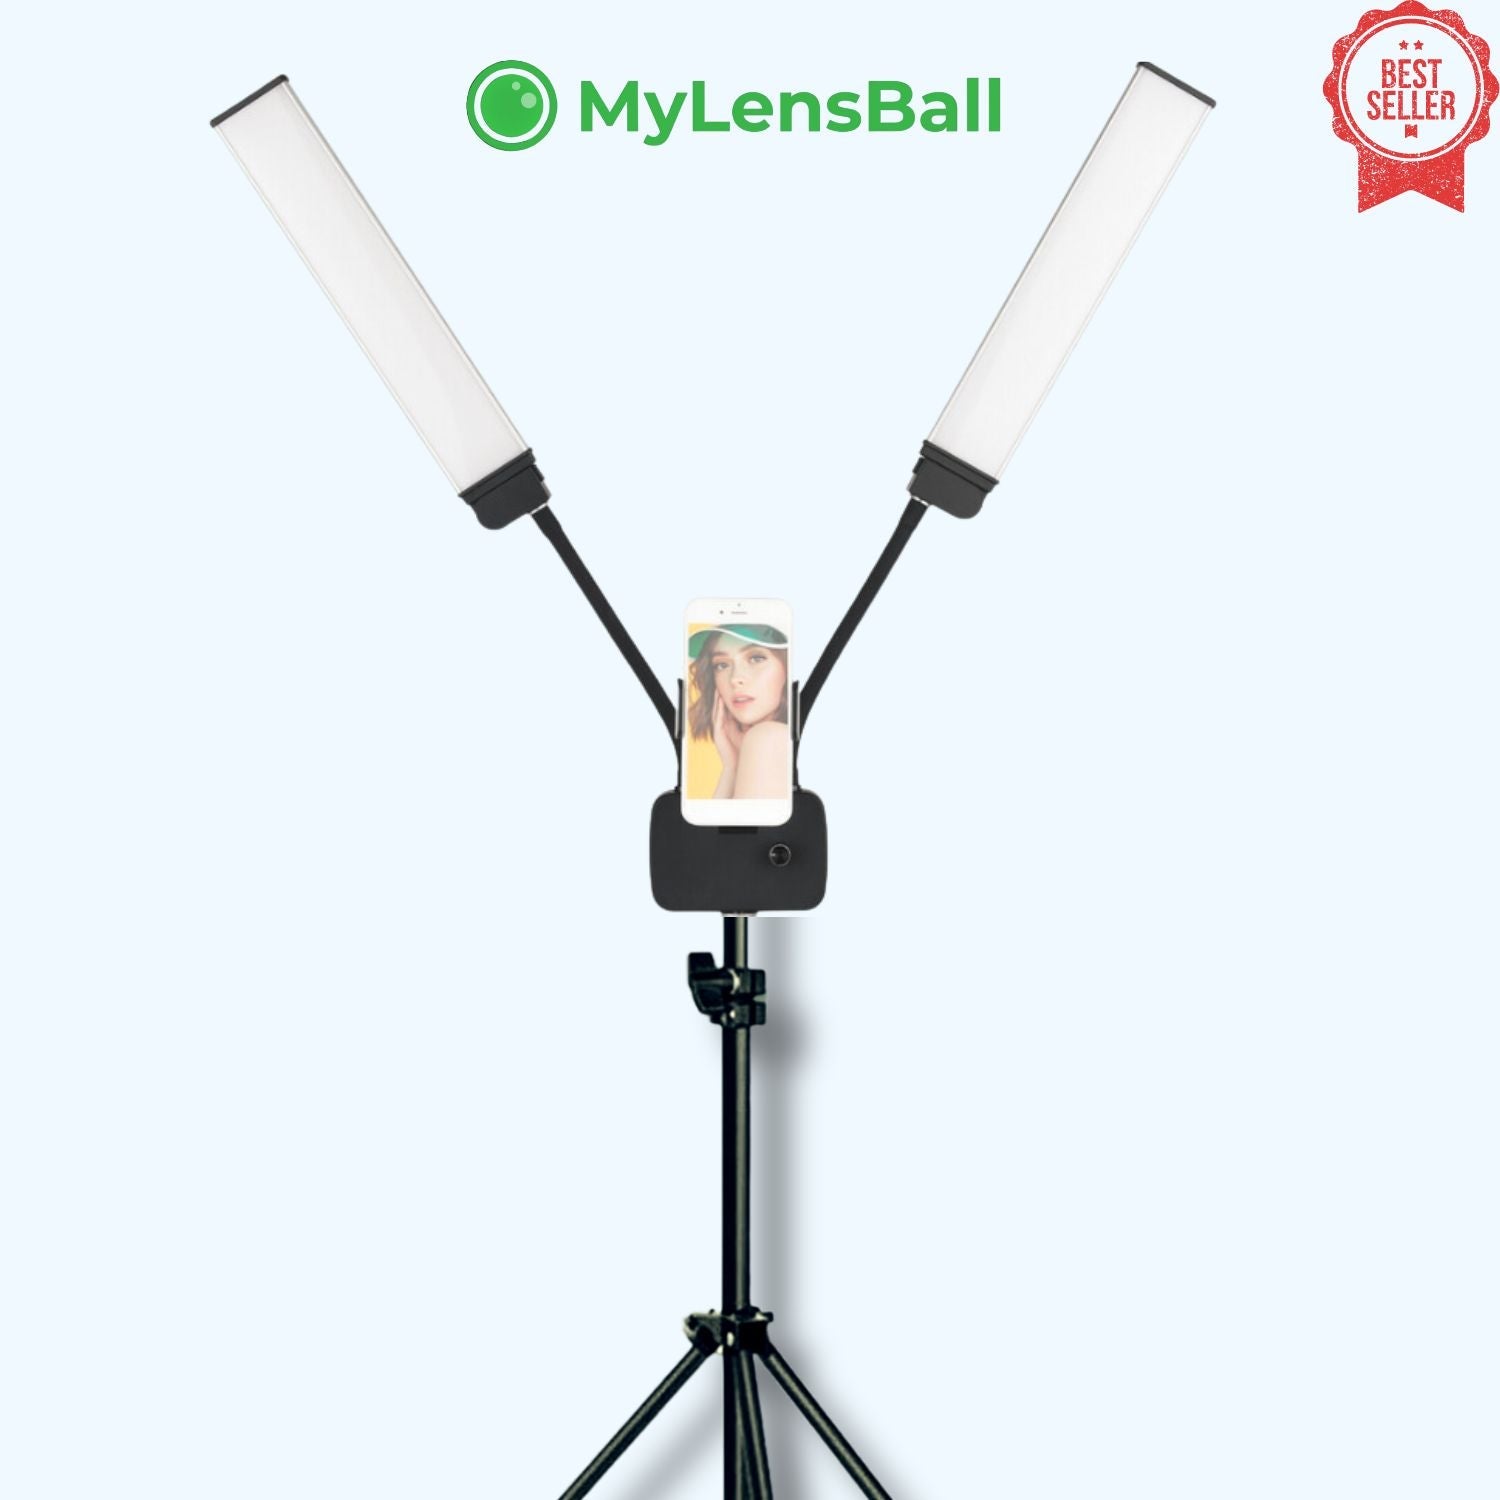 Twin 45W LED Lighting Kit (Made For Beauticians, Lash Techs, Content Creators) - mylensball.com.au